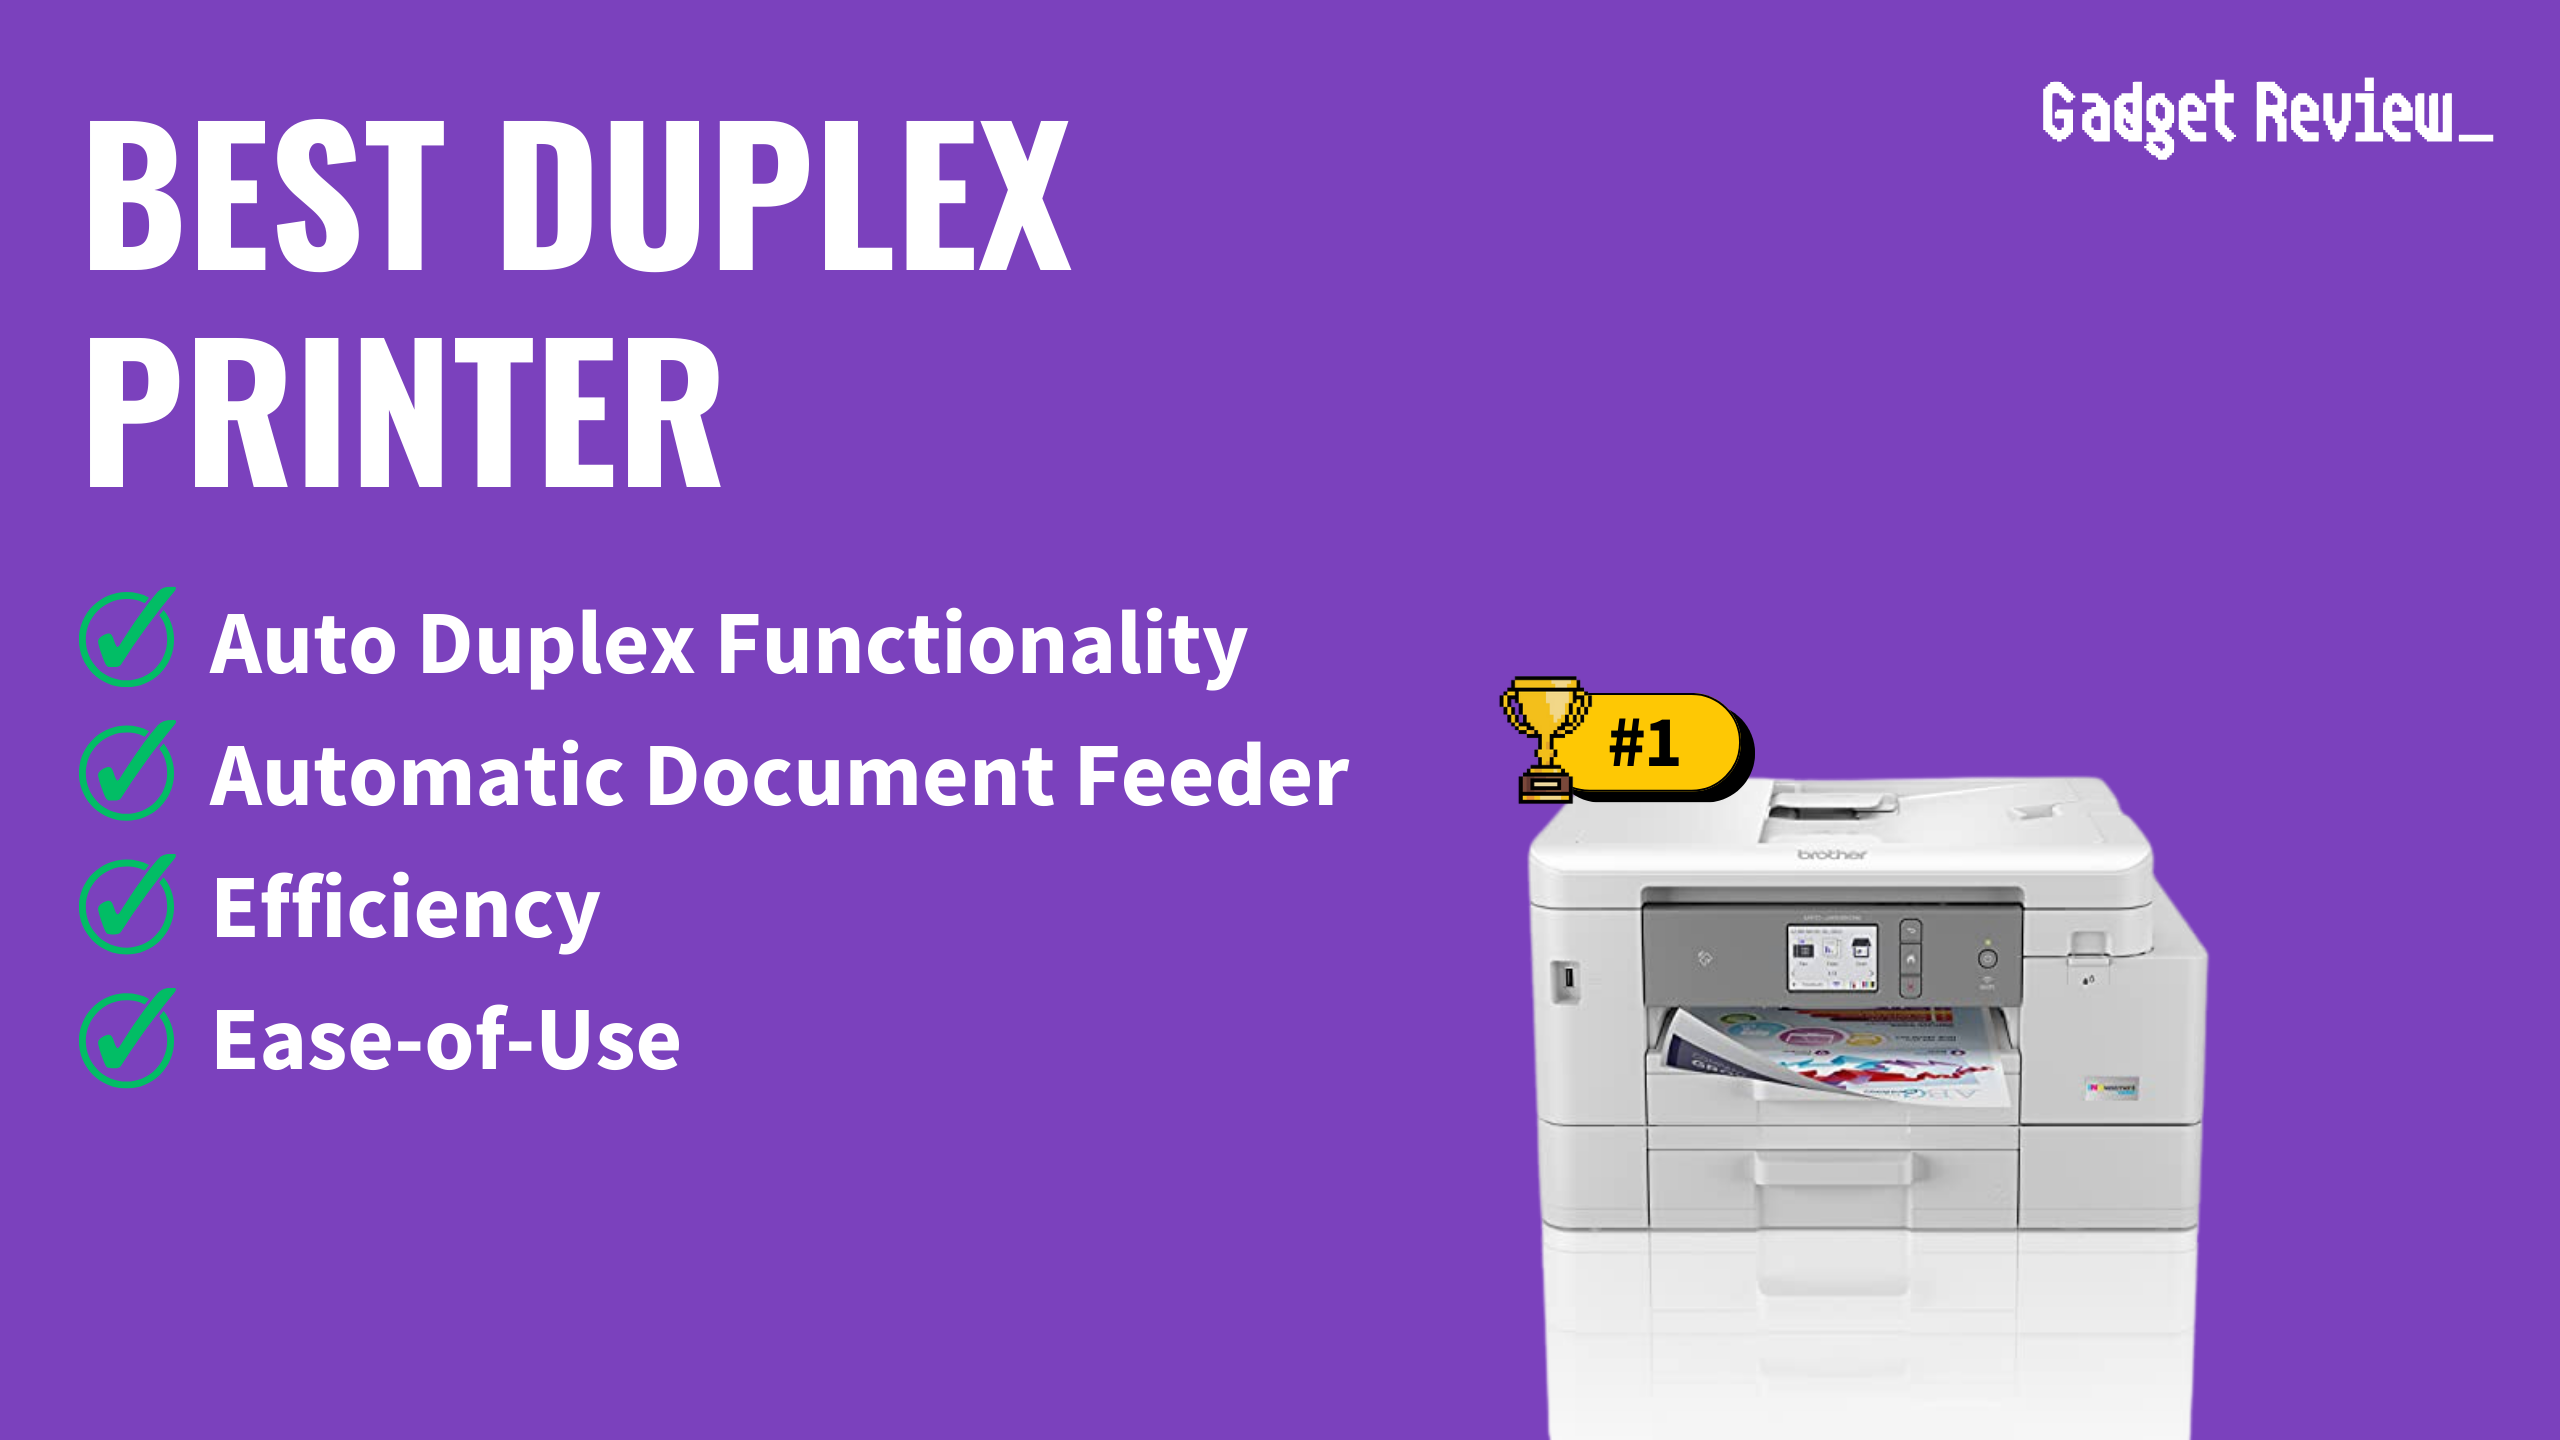 best duplex printer featured image that shows the top three best printer models